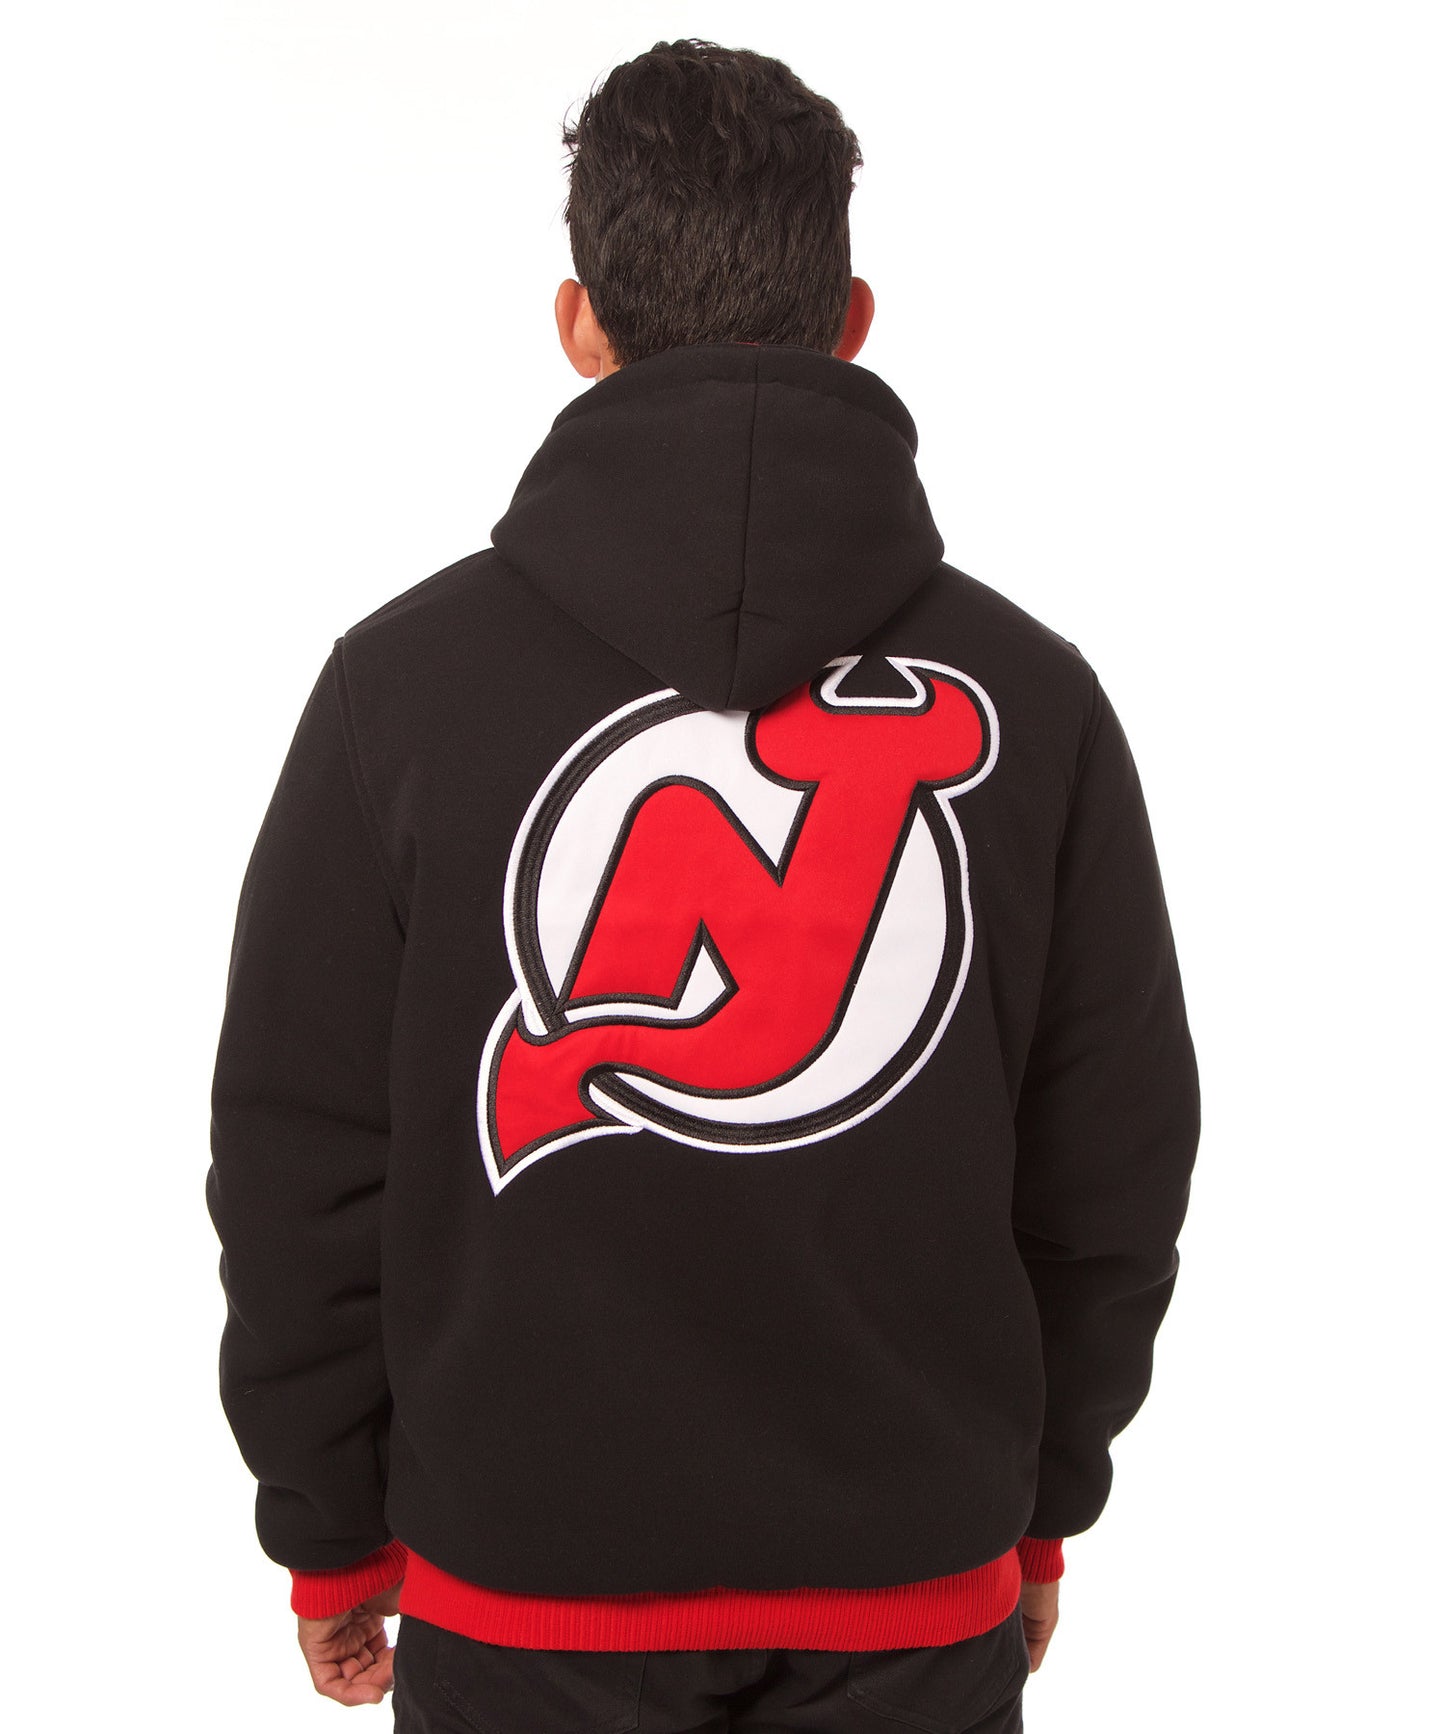 New Jersey Devils Reversible Fleece Jacket